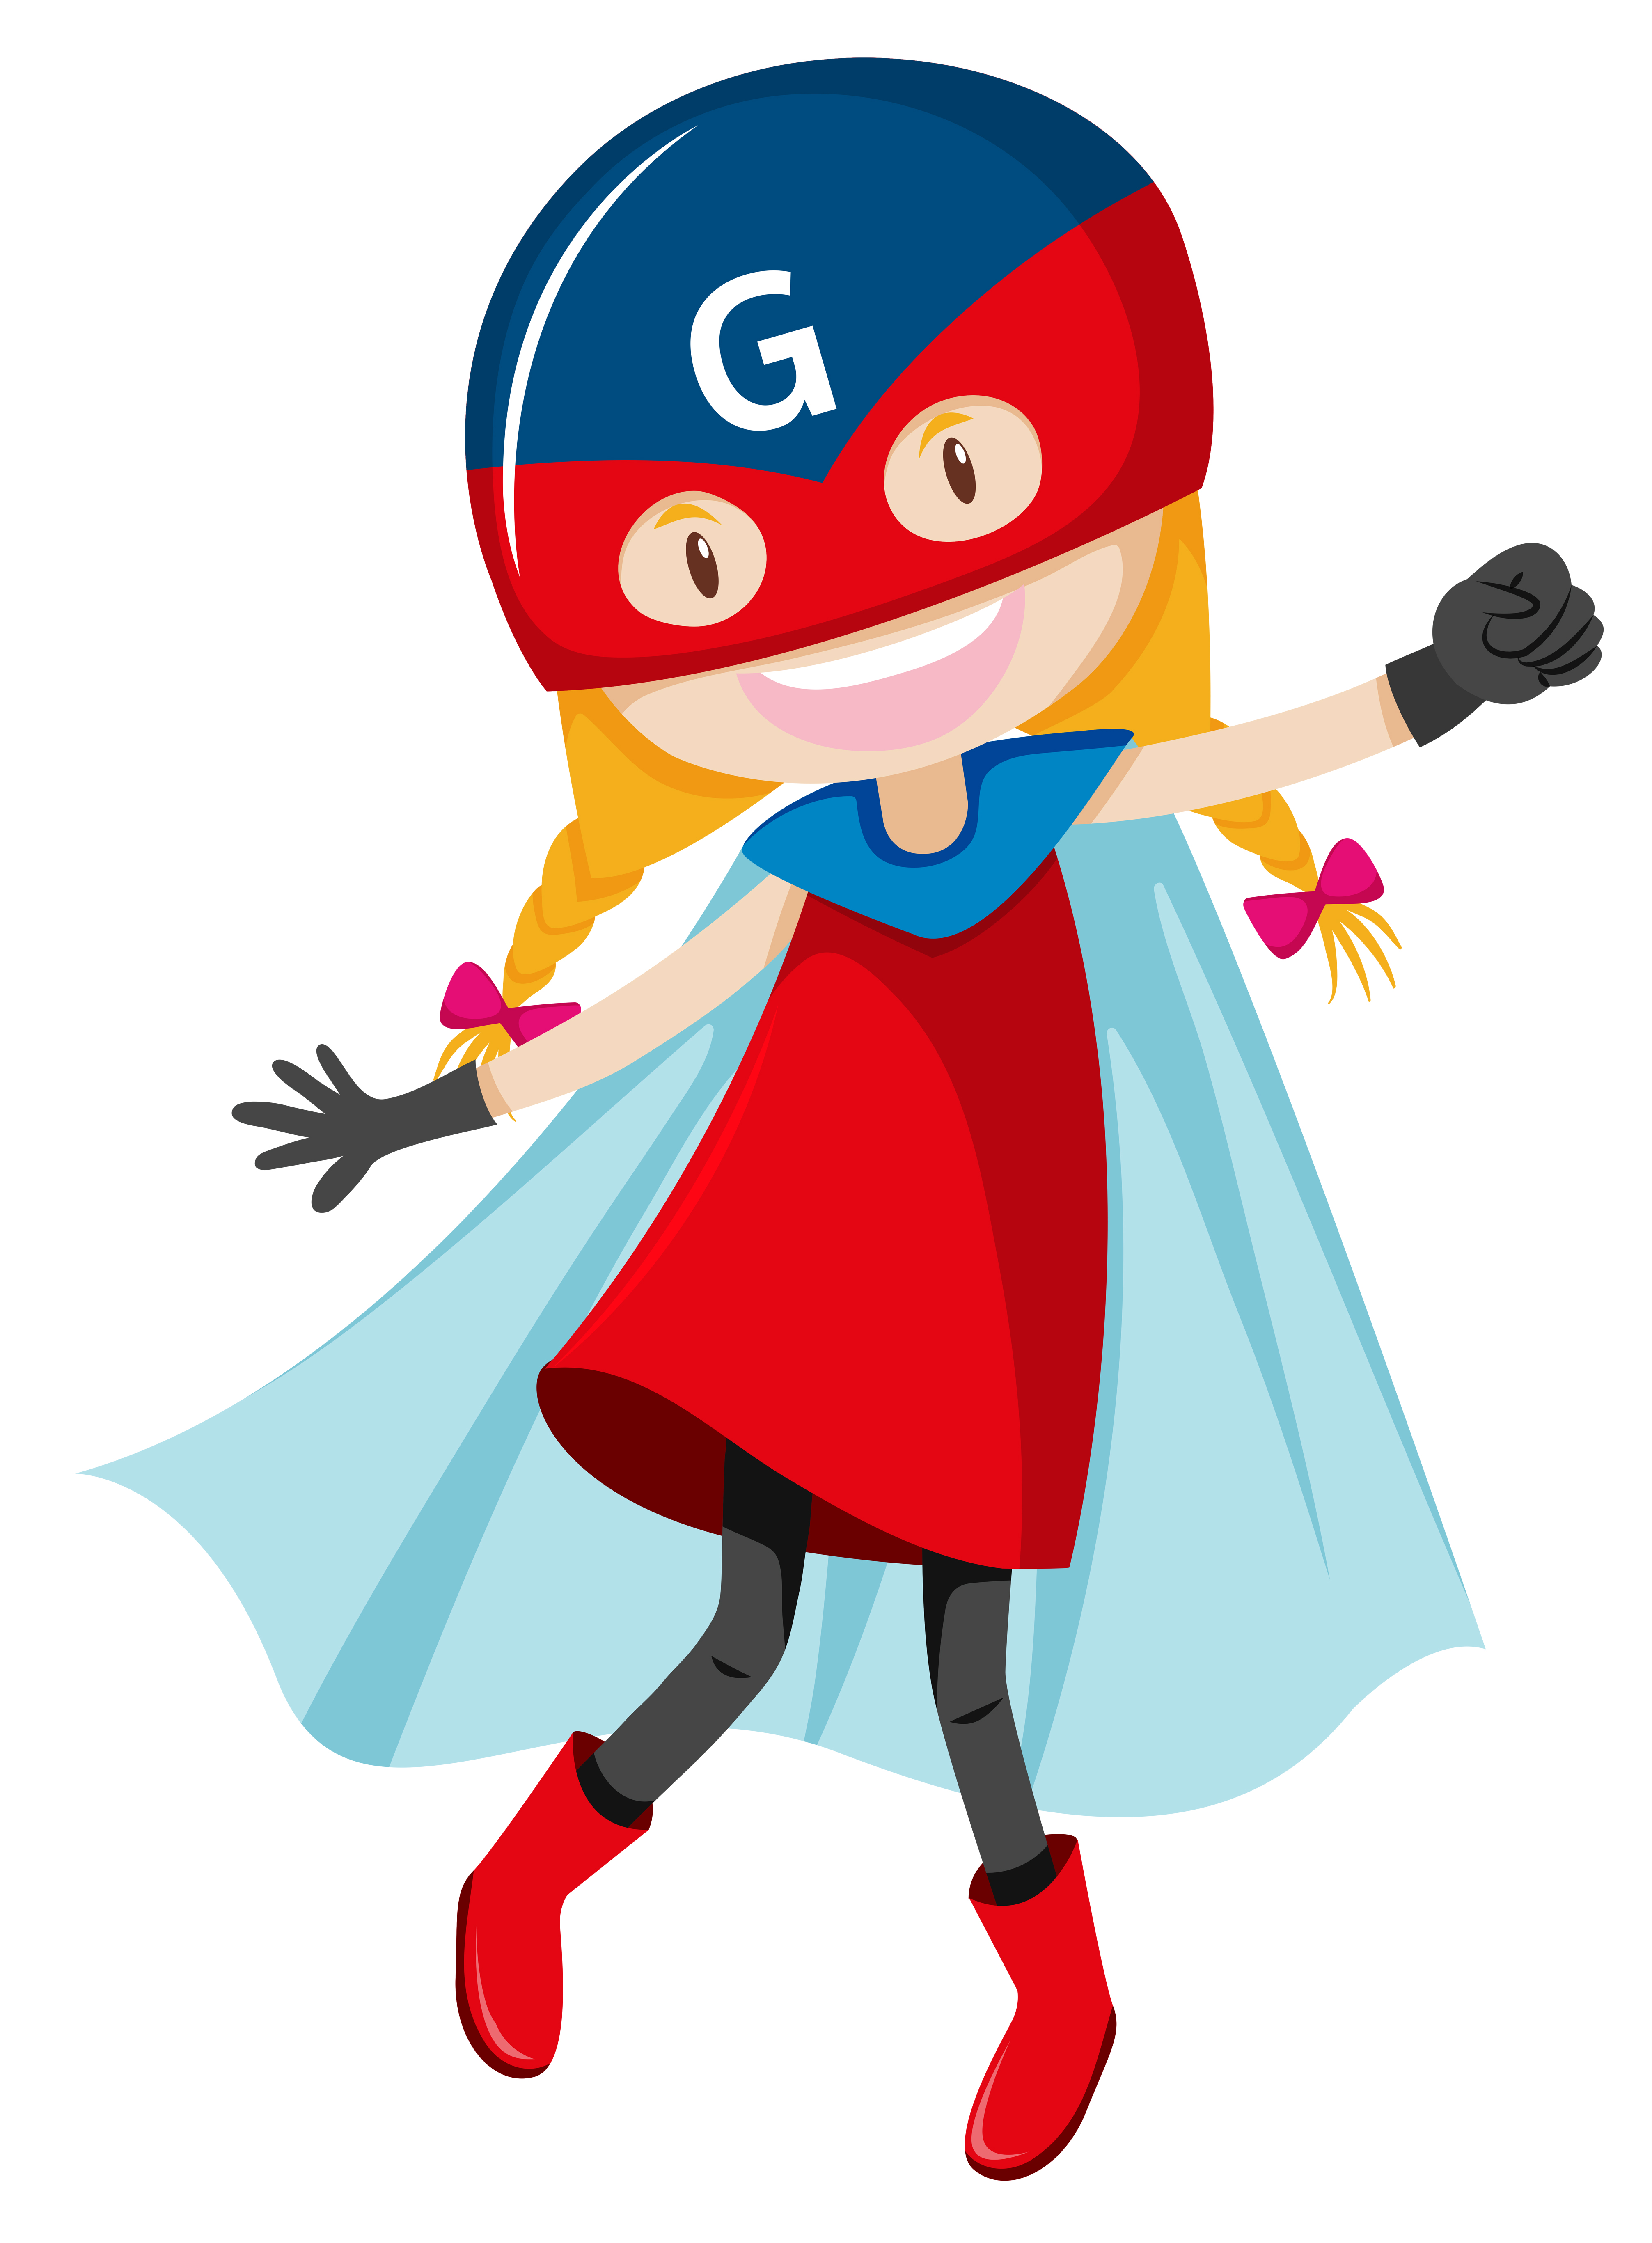 A female superhero character Download Free Vectors, Clipart Graphics